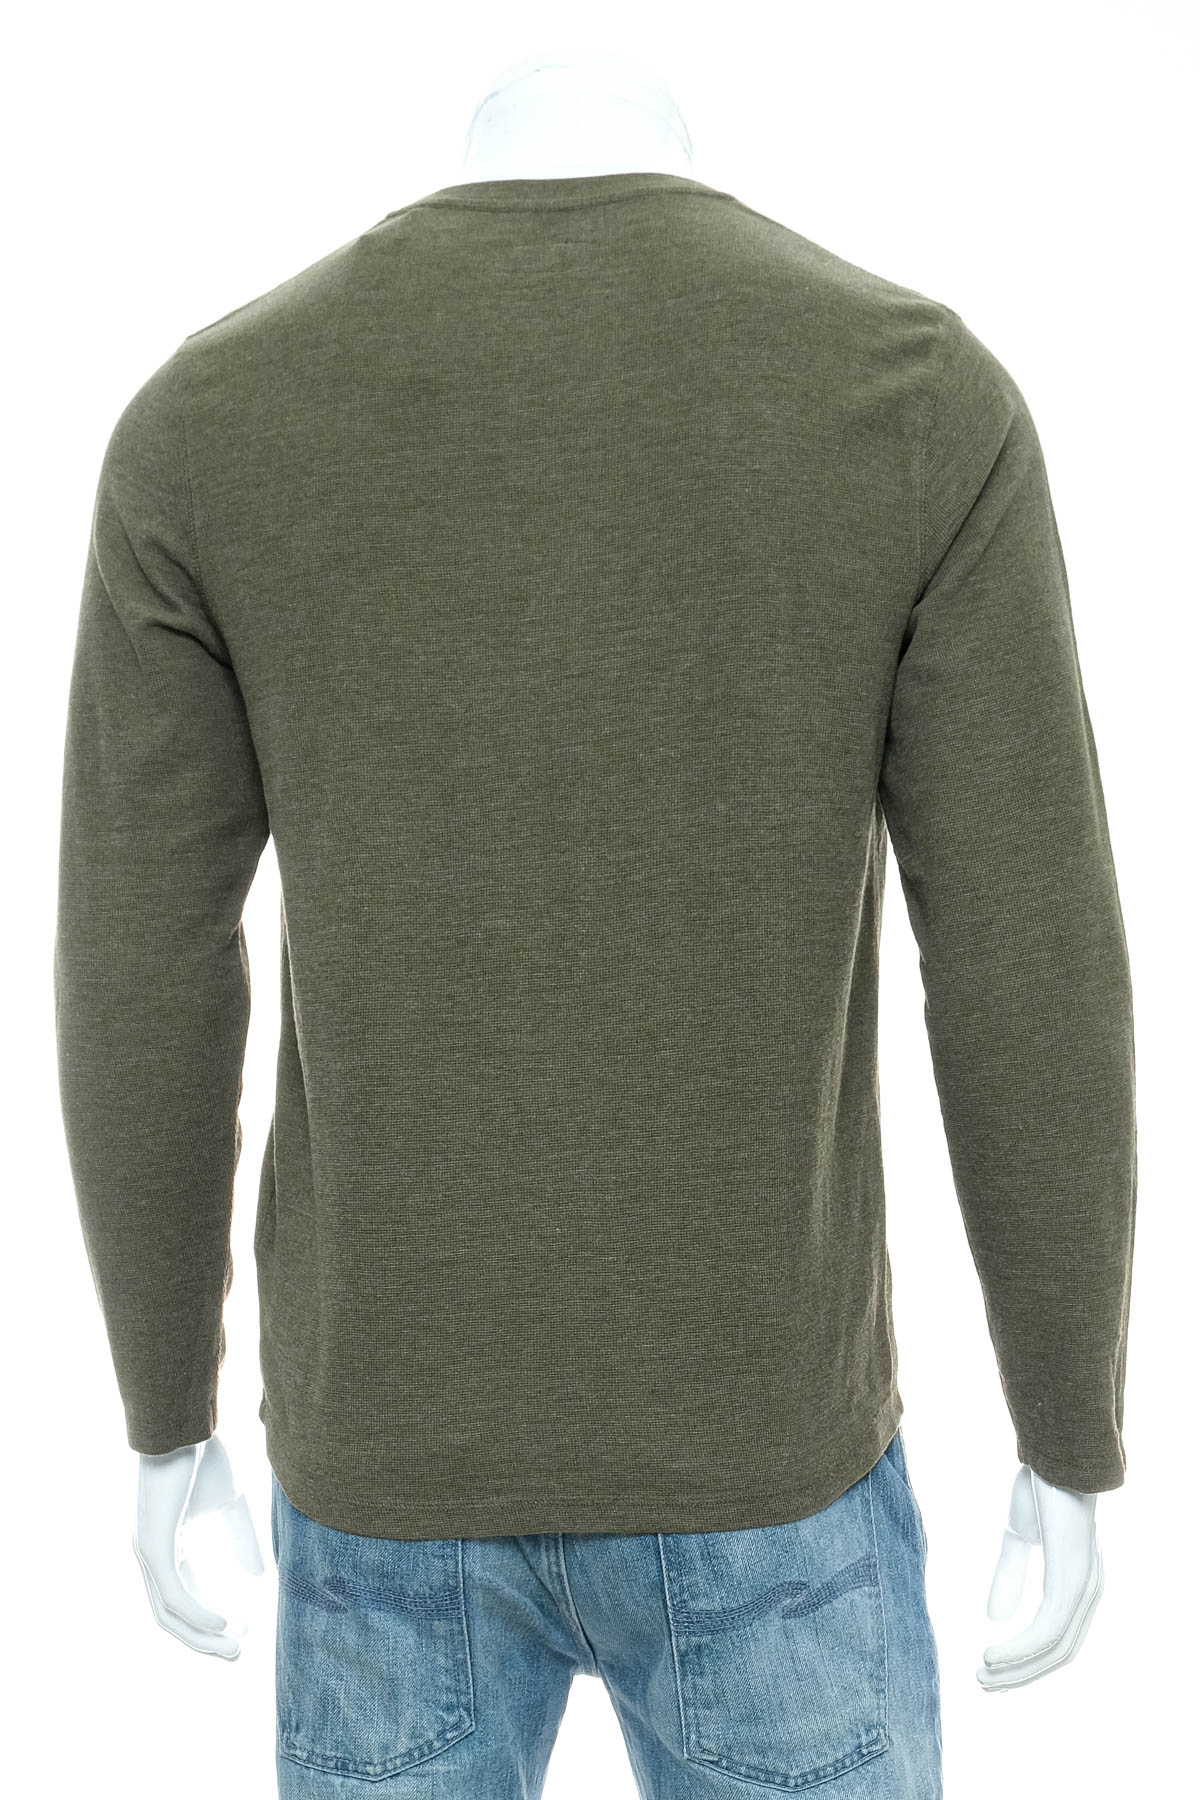 Men's sweater - McNeal - 1